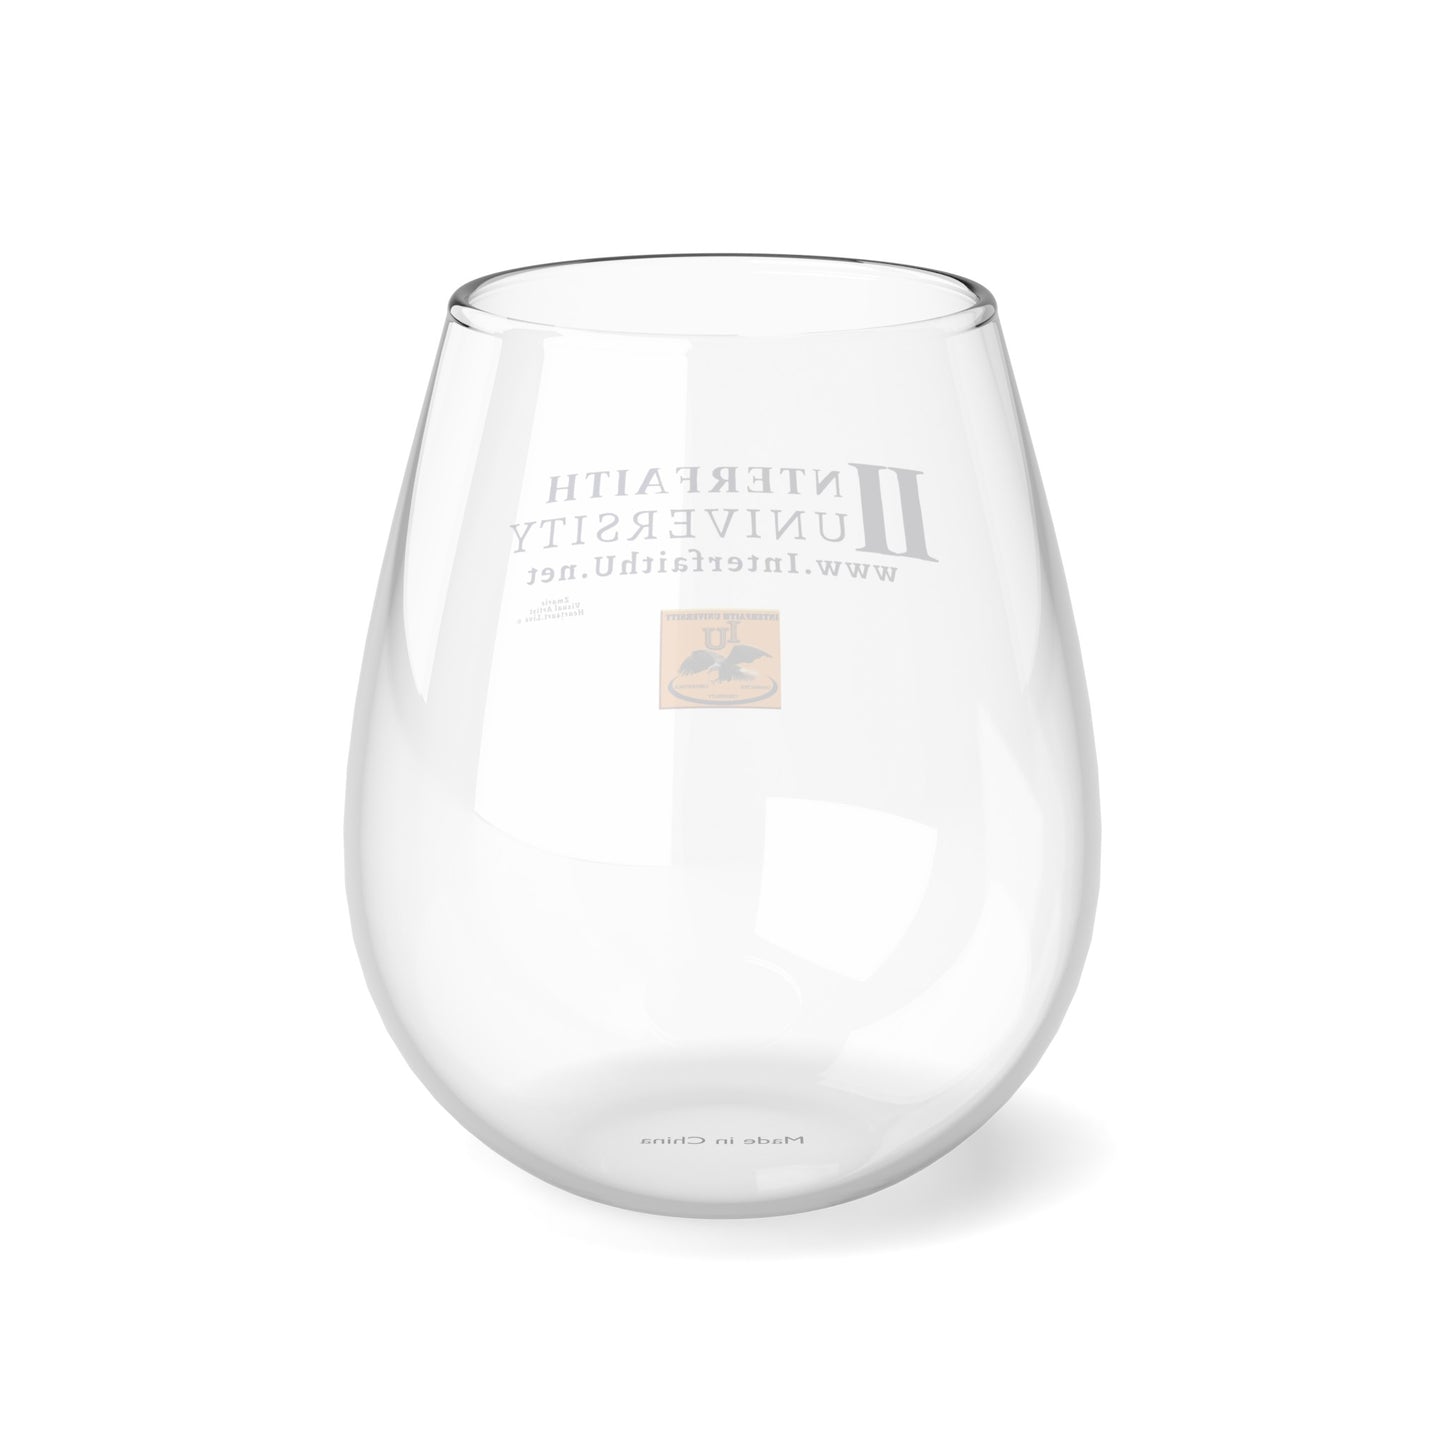 Interfaith University Stemless Glass, 11.75oz